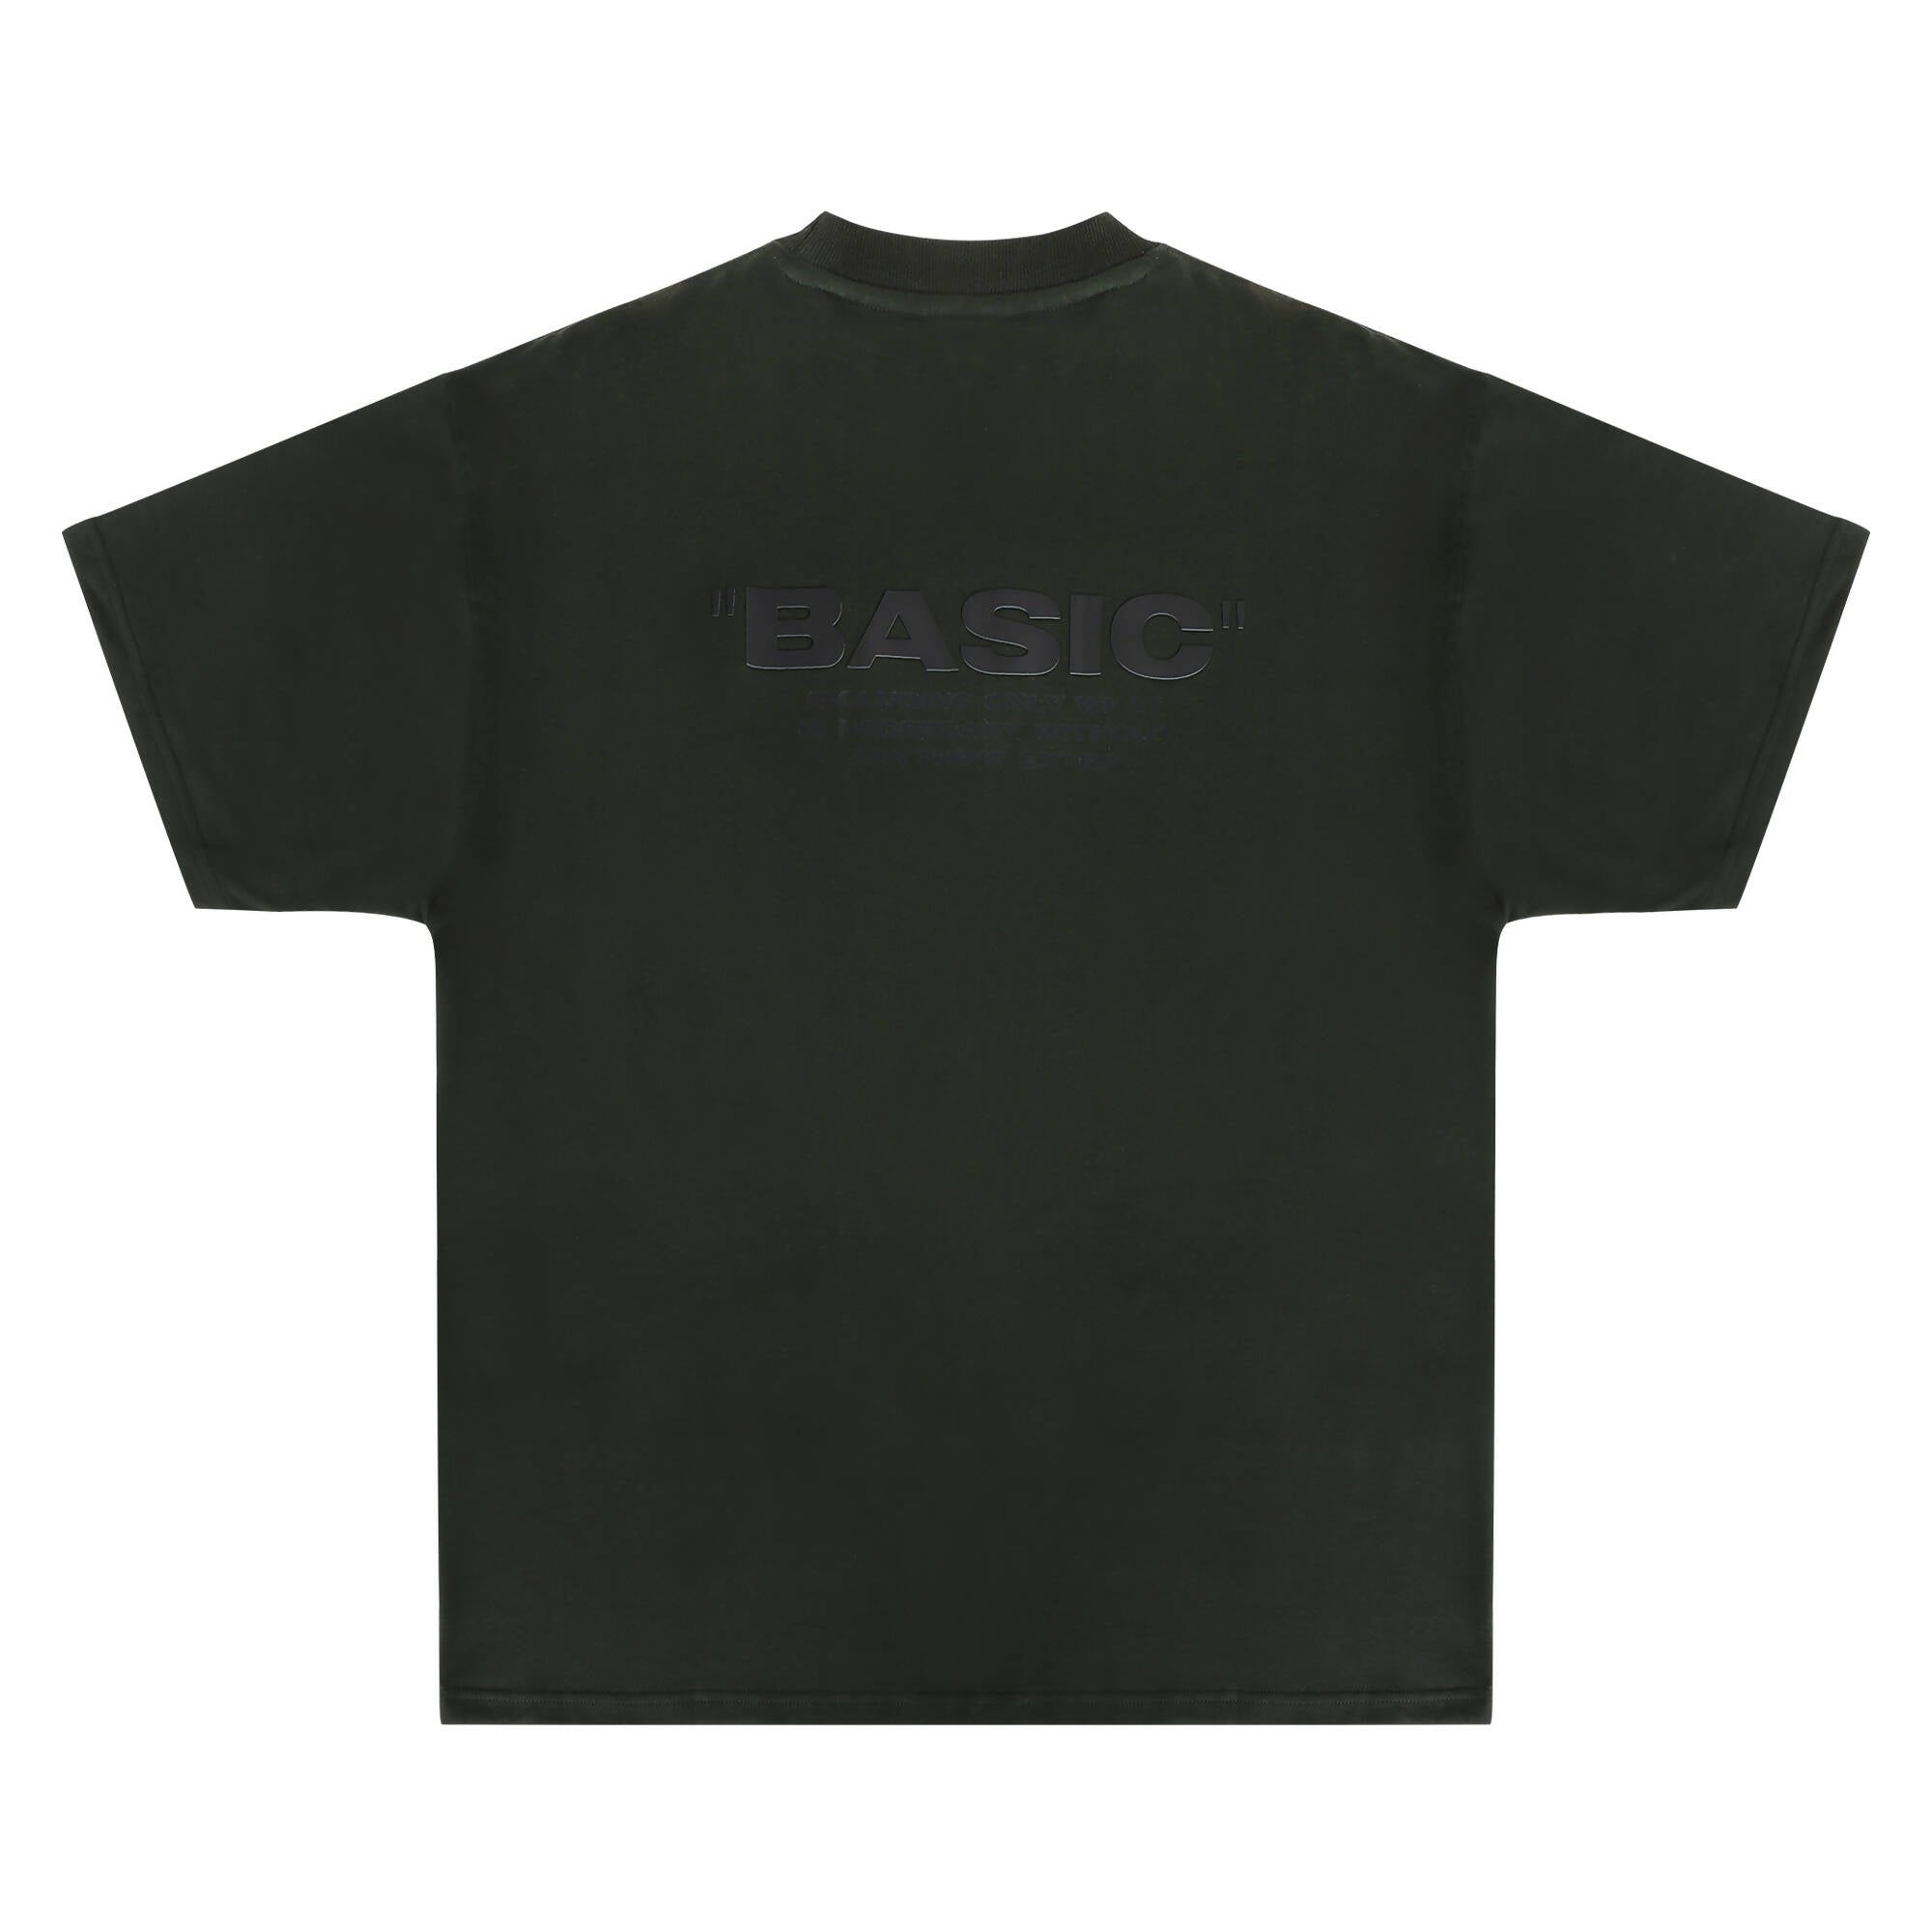 "BASIC" - Military Green